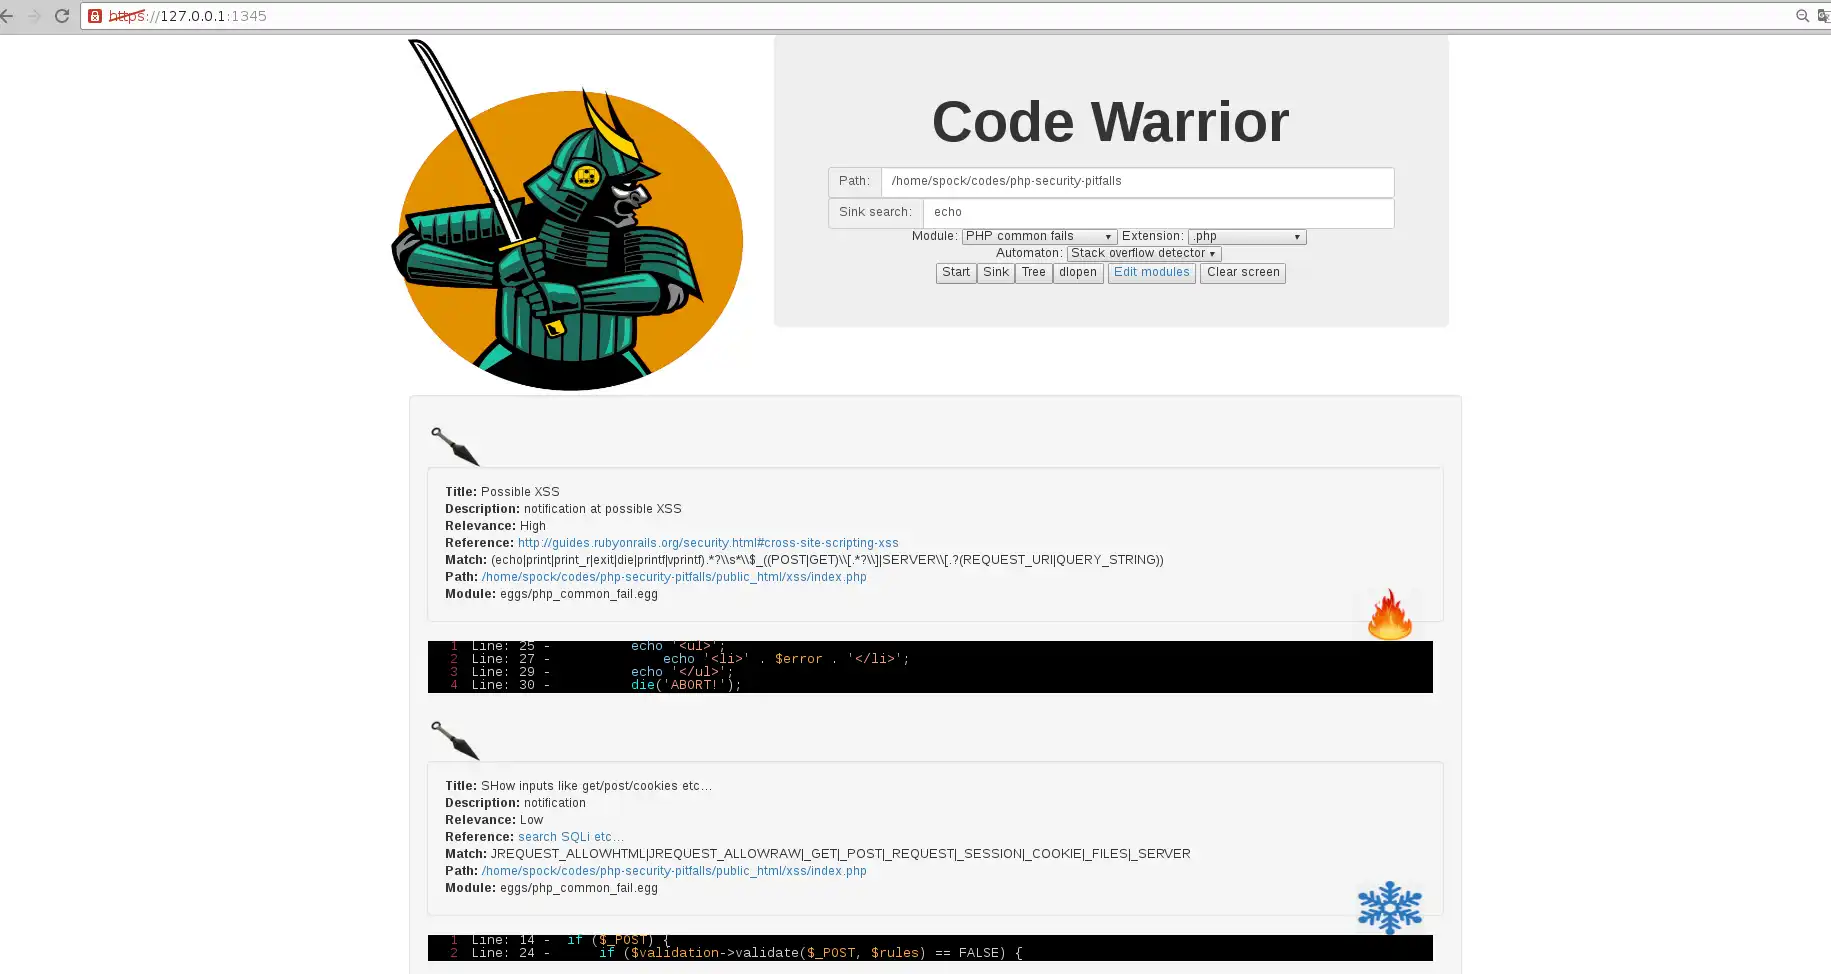 下载 Web 工具或 Web 应用程序 Code-warrior